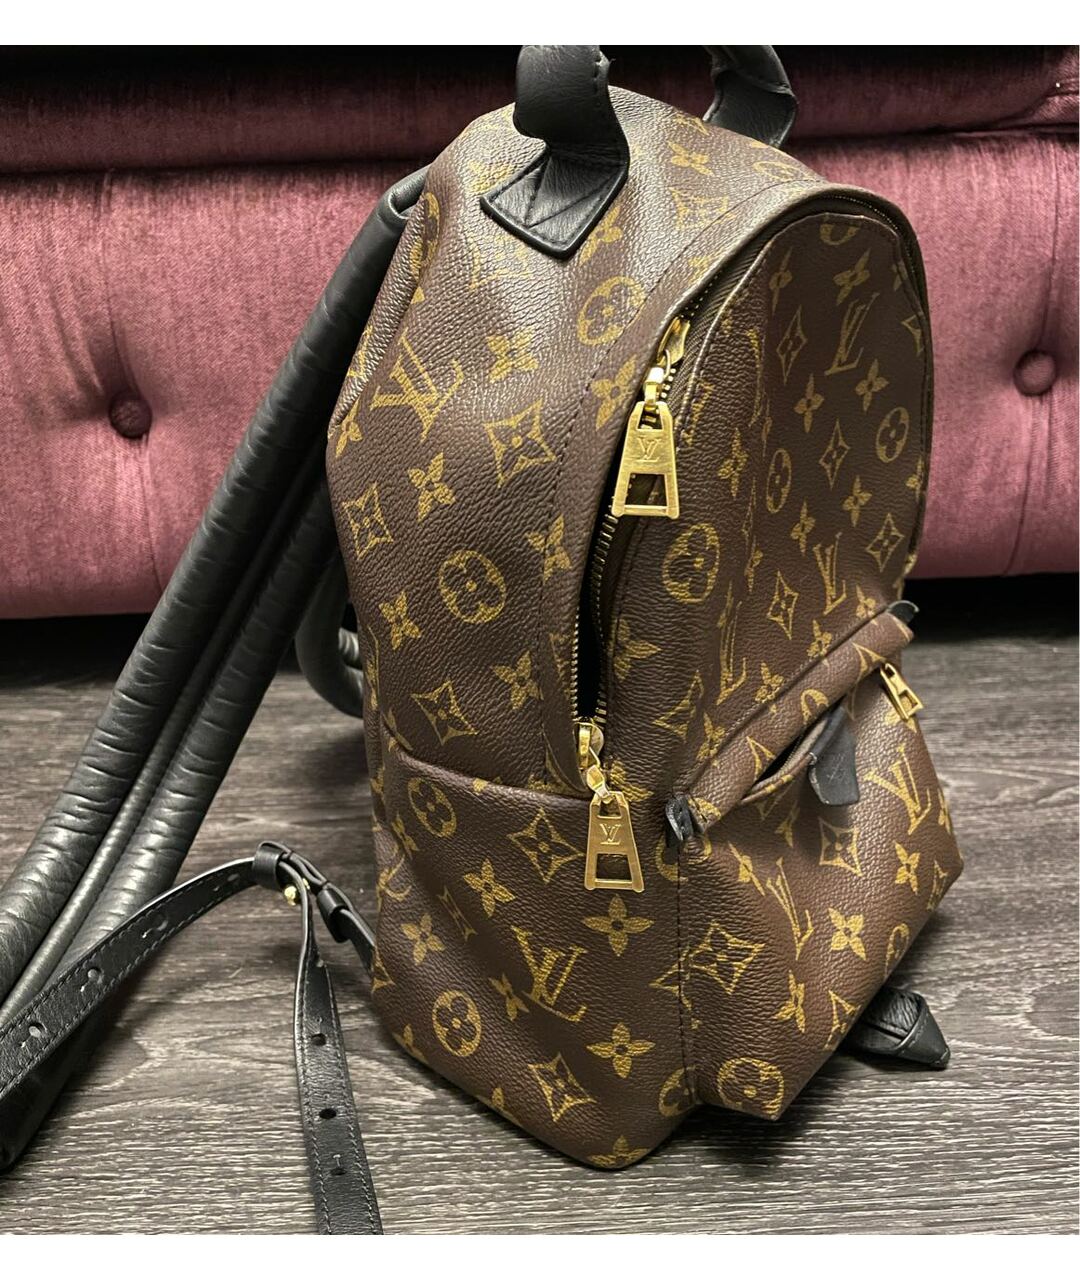 LOUIS VUITTON PRE-OWNED Коричневый кожаный рюкзак, фото 2